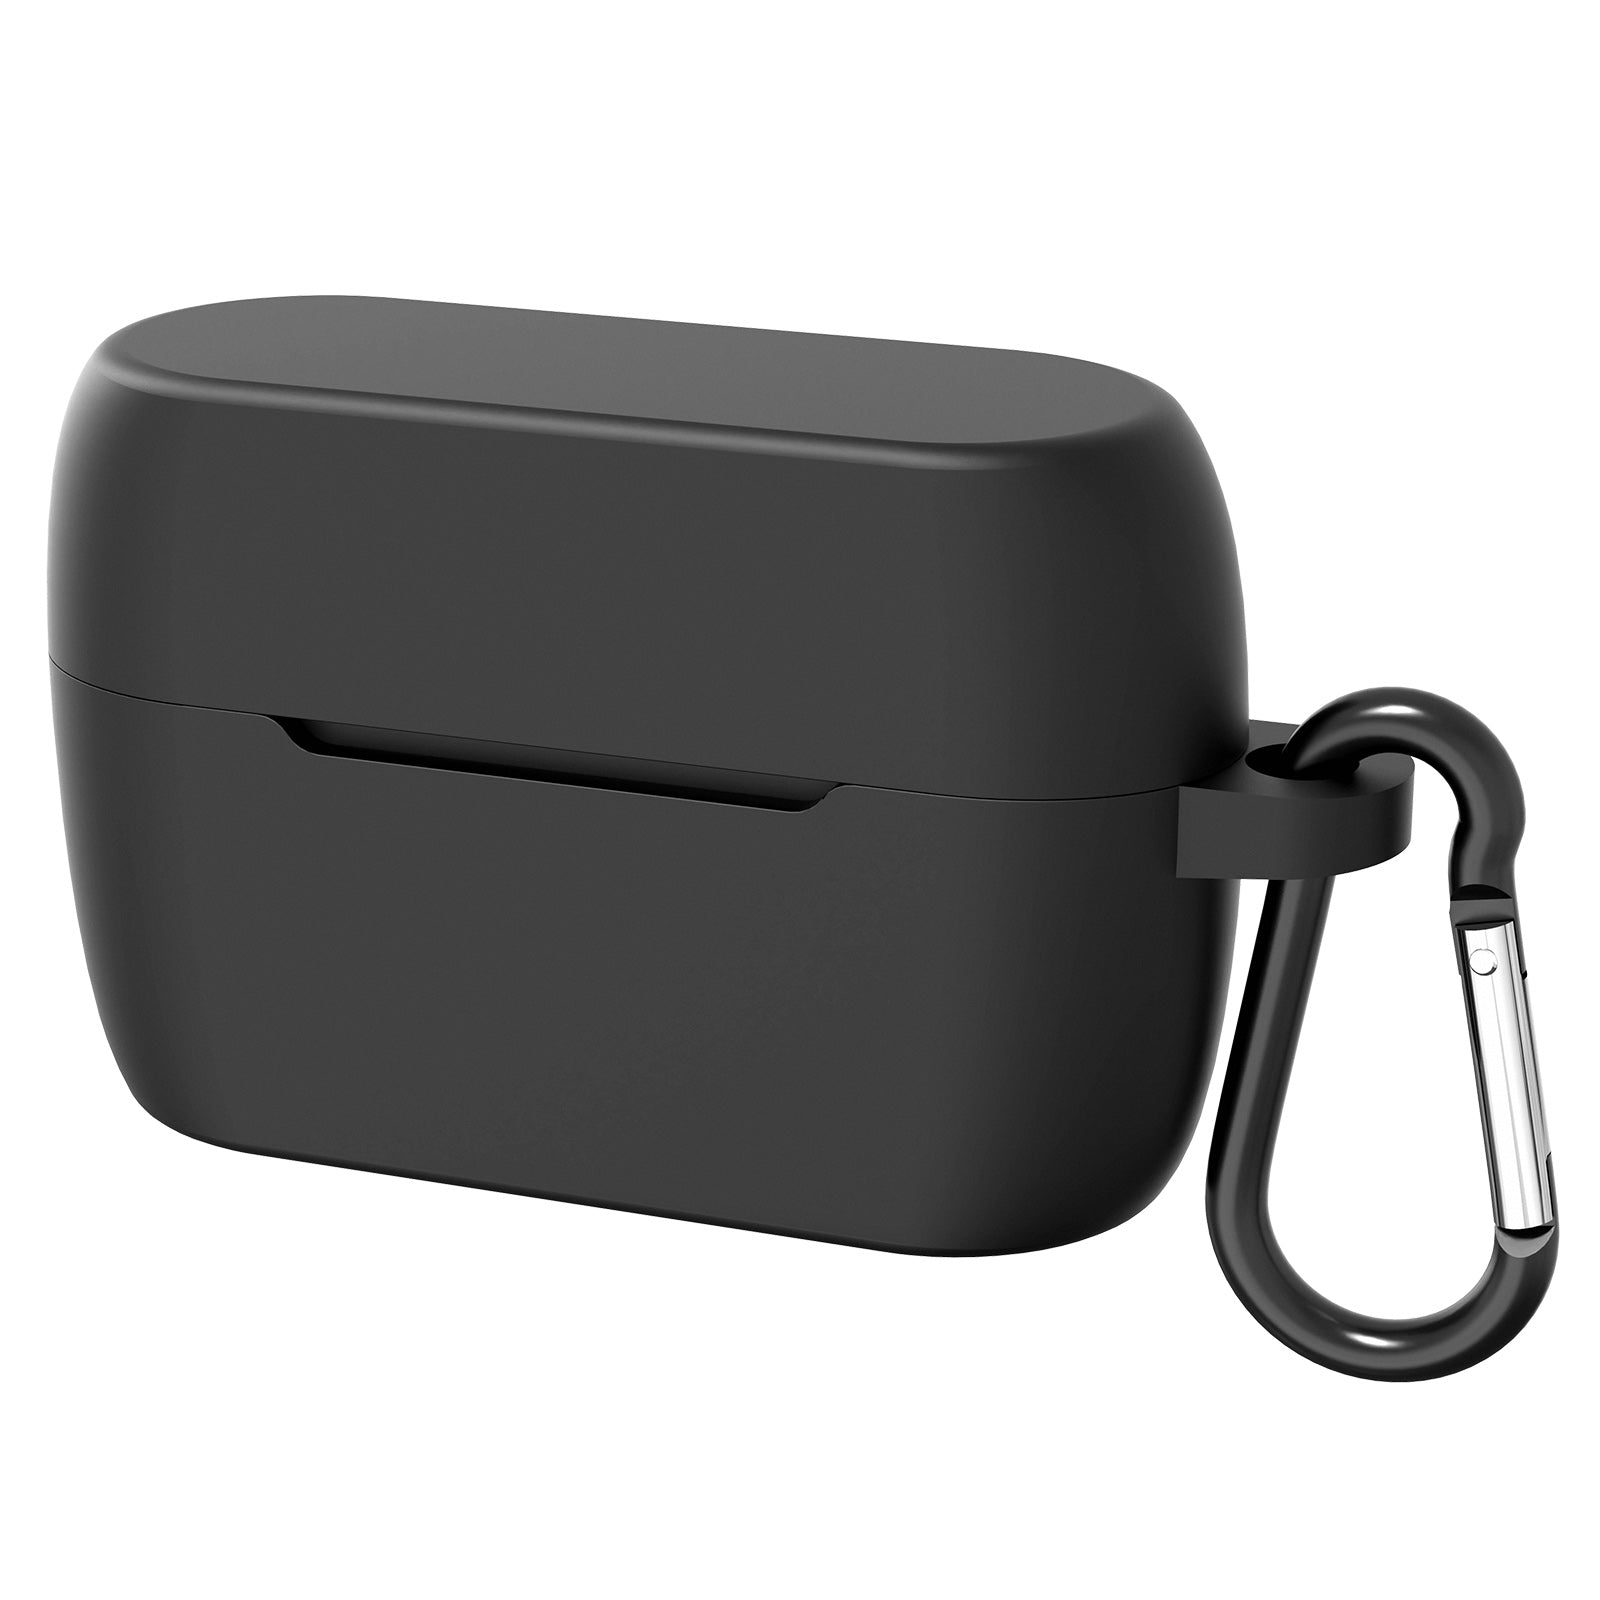 Geekria シリコン カバー 互換性 カバー Jabra Elite 85t 対応 True Wireless Earbuds  充電ケース充電ケースカバー 外装カバー キーホルダーフック付き、充電ポートアクセス可能 (Black)